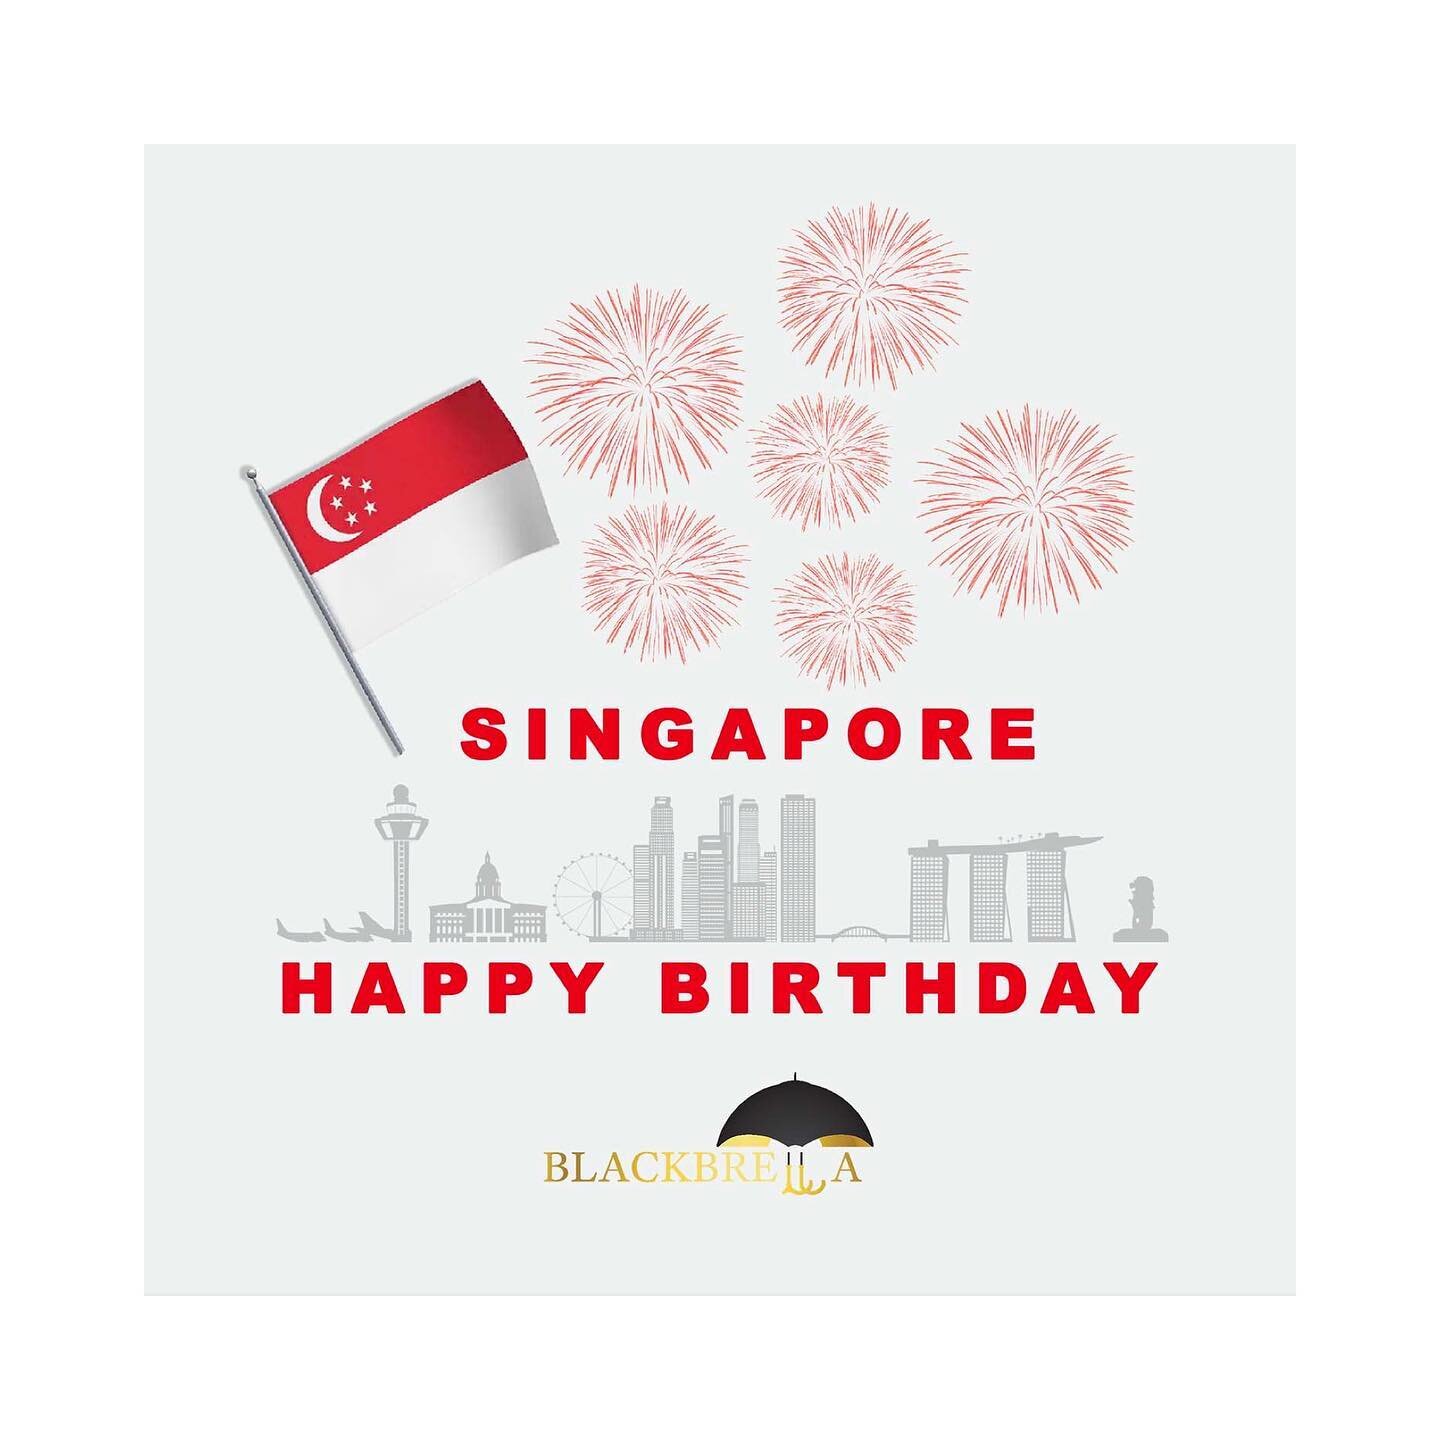 Wishing Singapore 🇸🇬 
Happy 55th Birthday!❤️🤍
May Singapore be well, happy and prosperous! 
#singapore🇸🇬 #happybirthdaysingapore #sgunited #sg #prosperous #safe #happy #grateful #gratitude